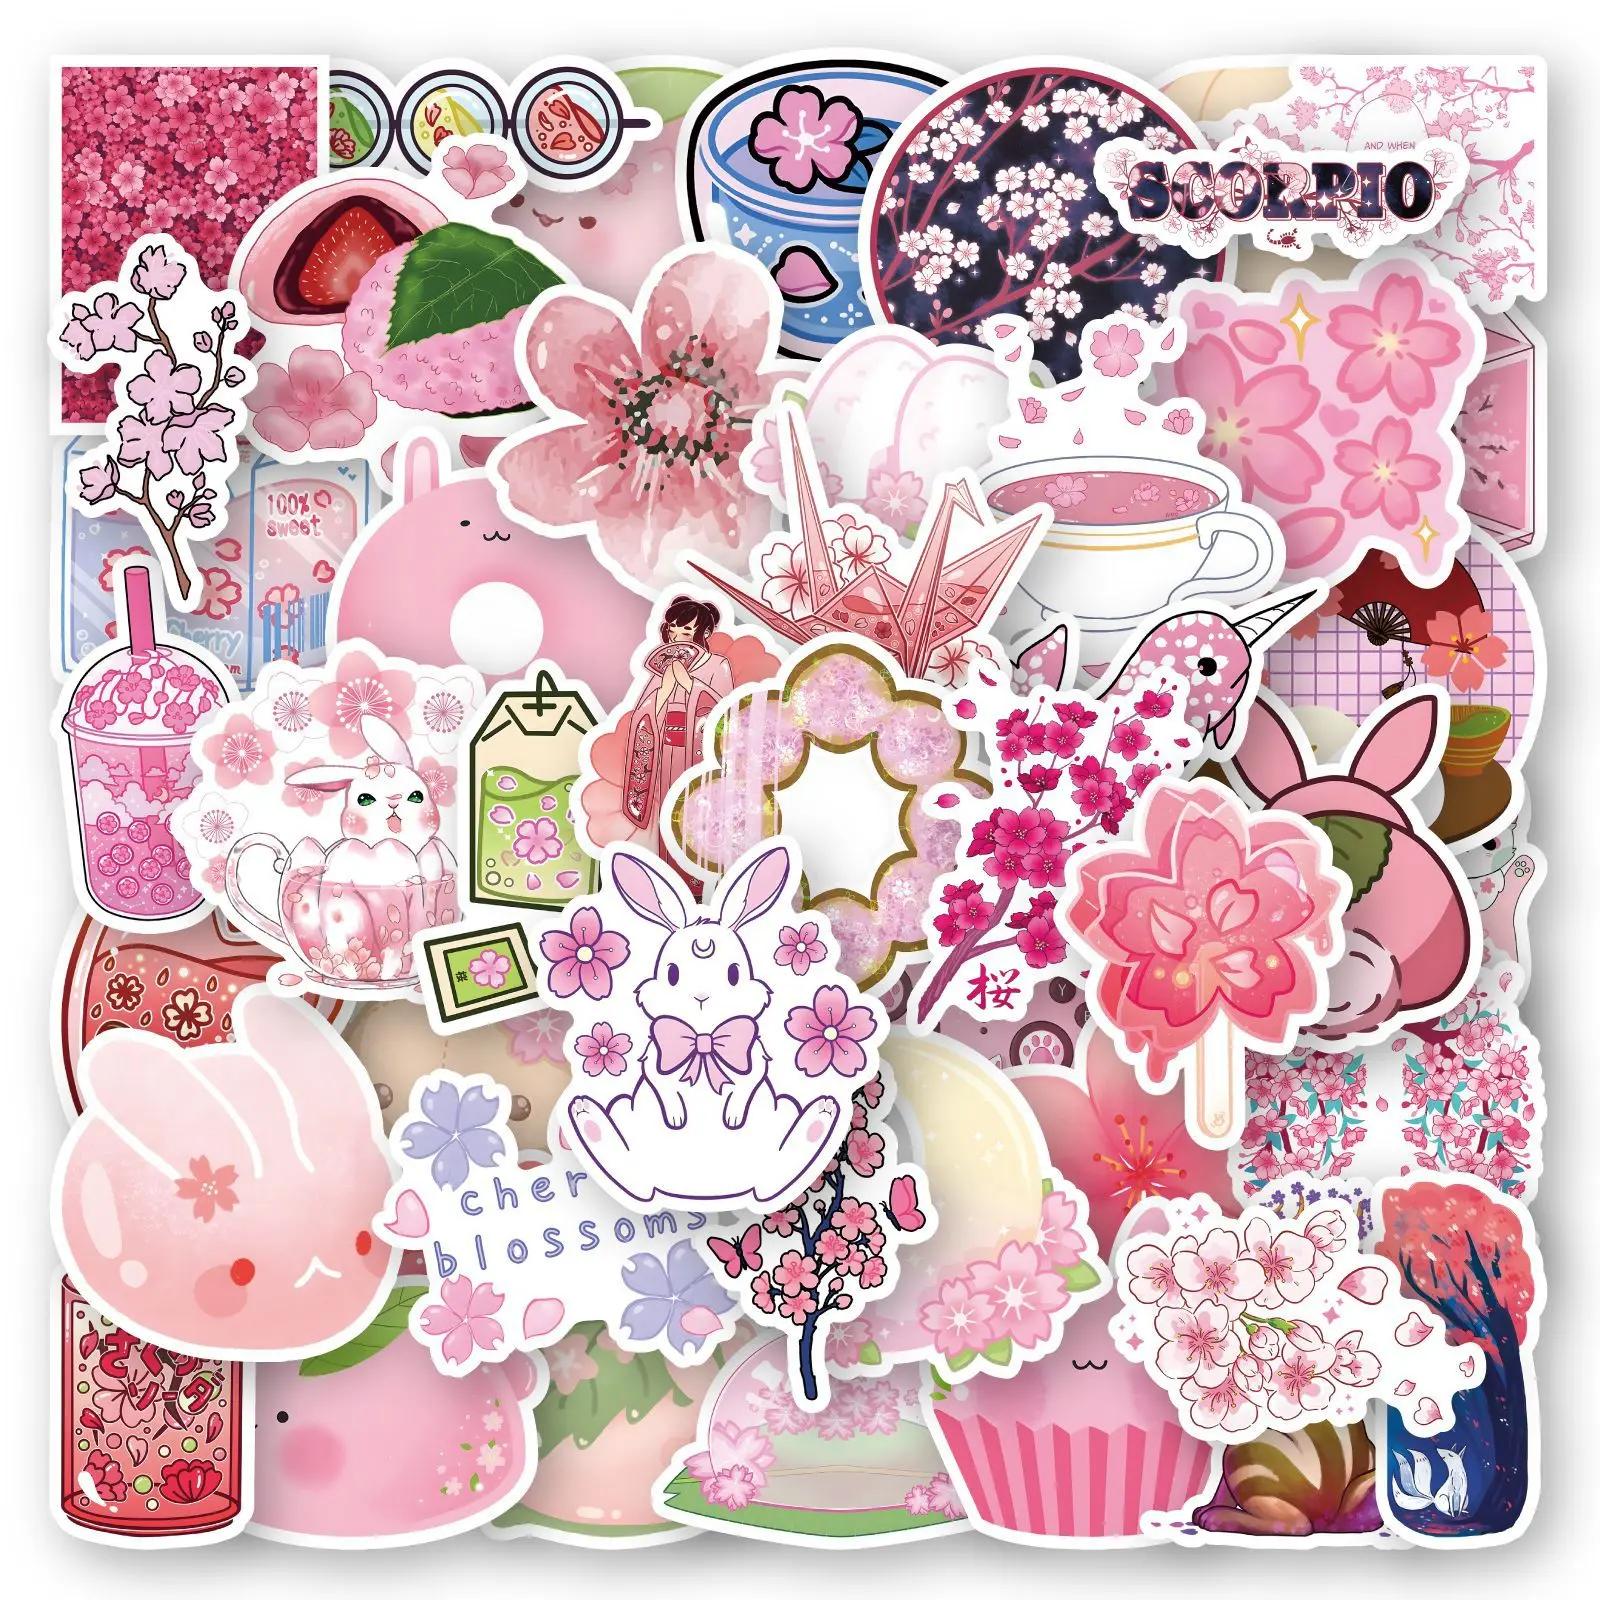 50Pcs Cute Animal Pink sakura Stickers Aesthetic Girls for Notebook Luggage Stationery Phone Cartoon Graffiti Sticker Toys 10 30 50pcs art pink graffiti stickers